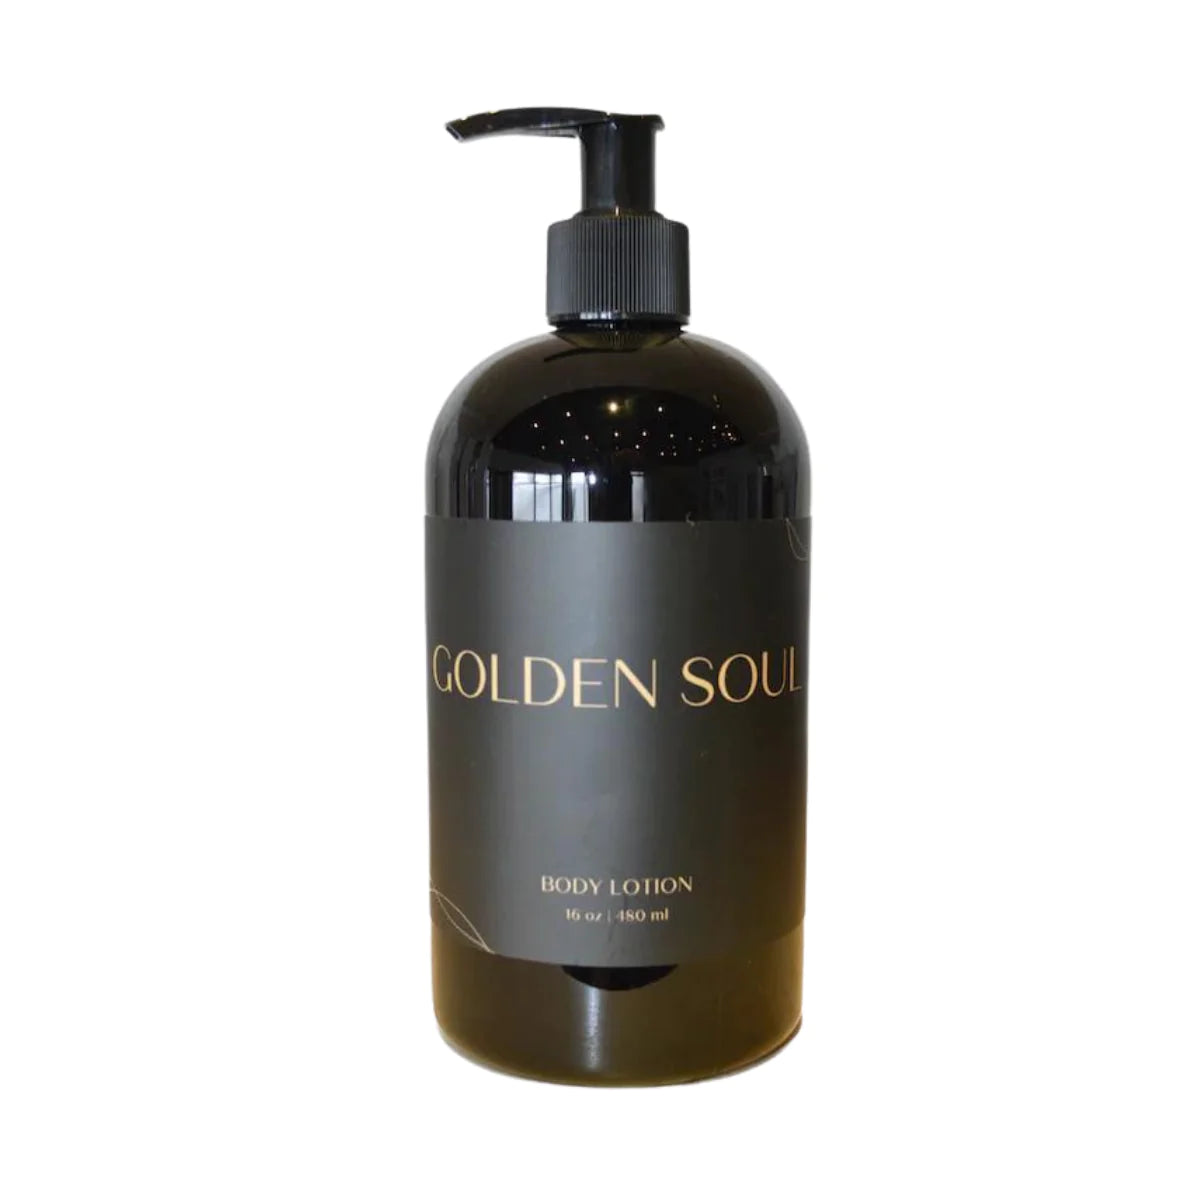 Golden Soul Body Lotion